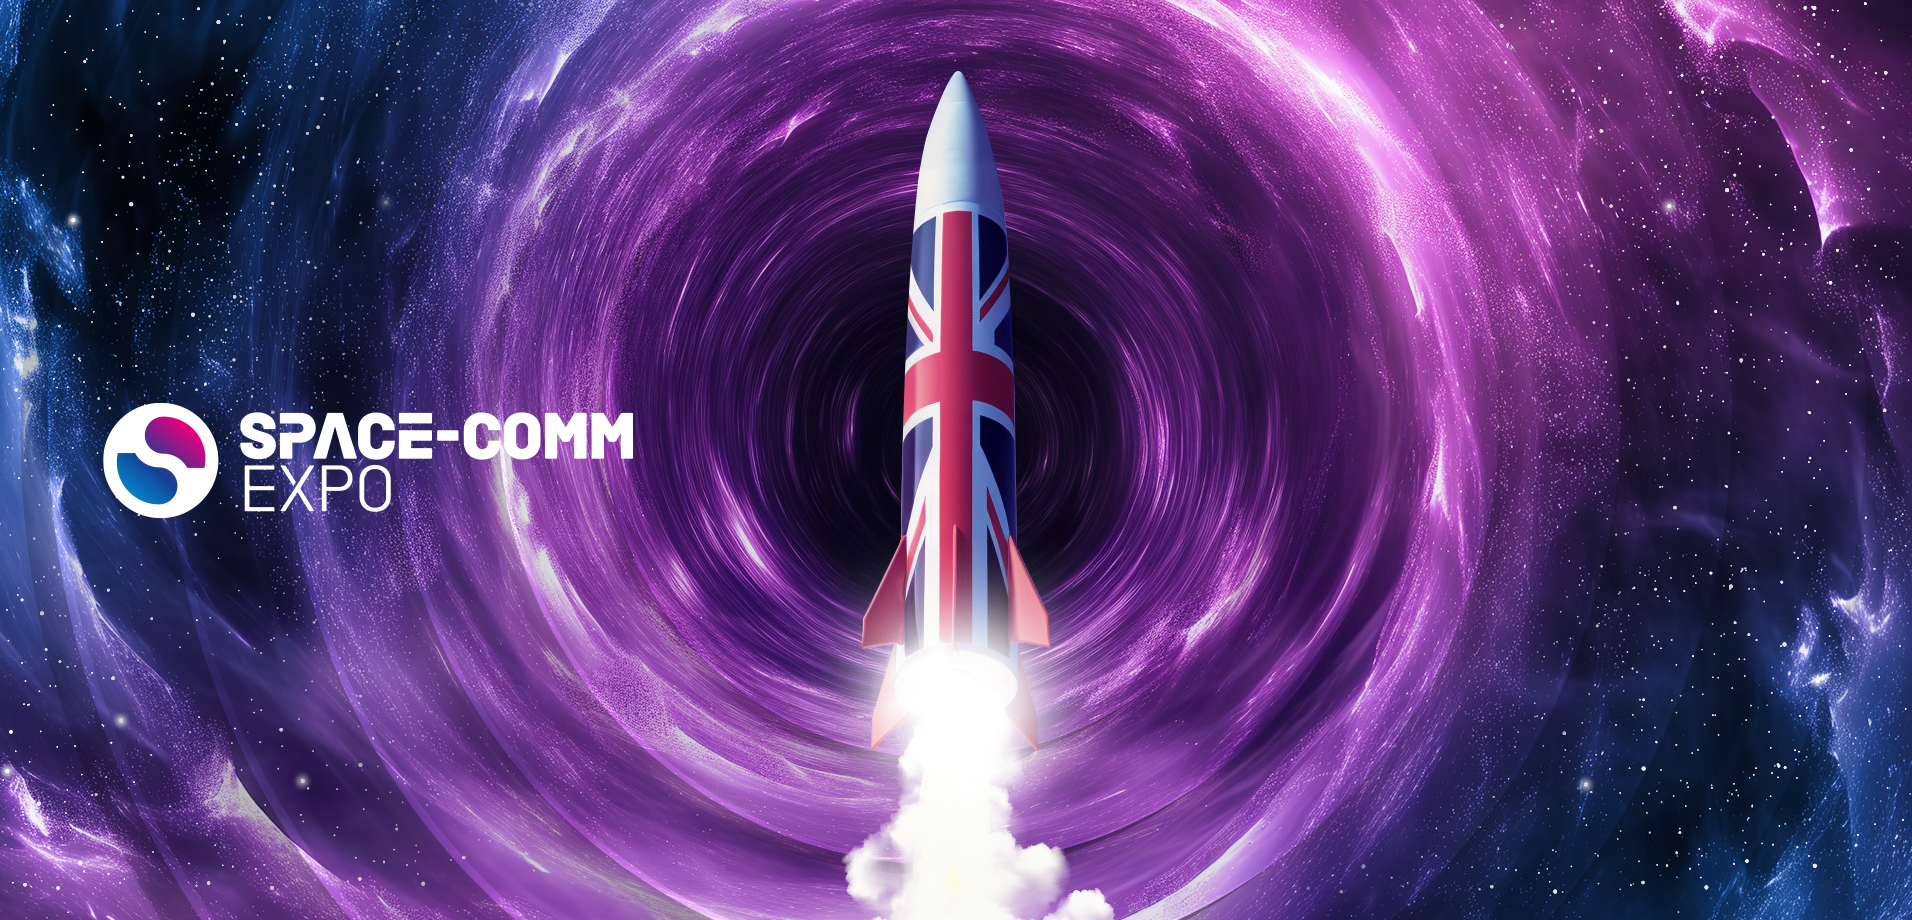 Space Comm Expo: Airbus announces new UK Space Accelerator Program